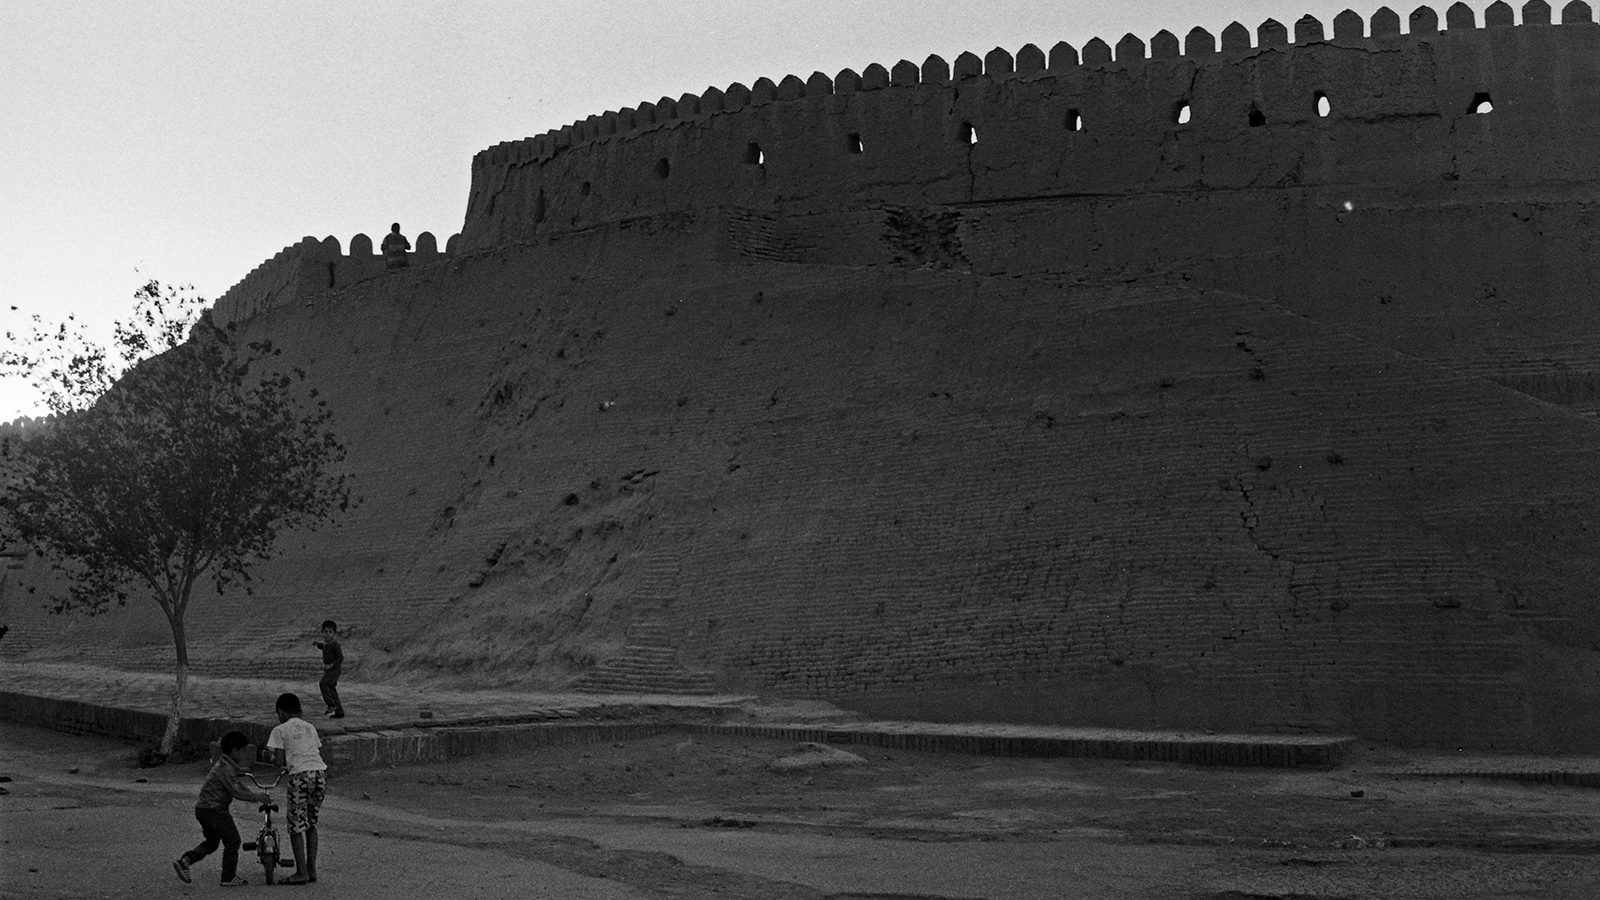 Silk Road Backstreets - Cycling around city walls, Khiva